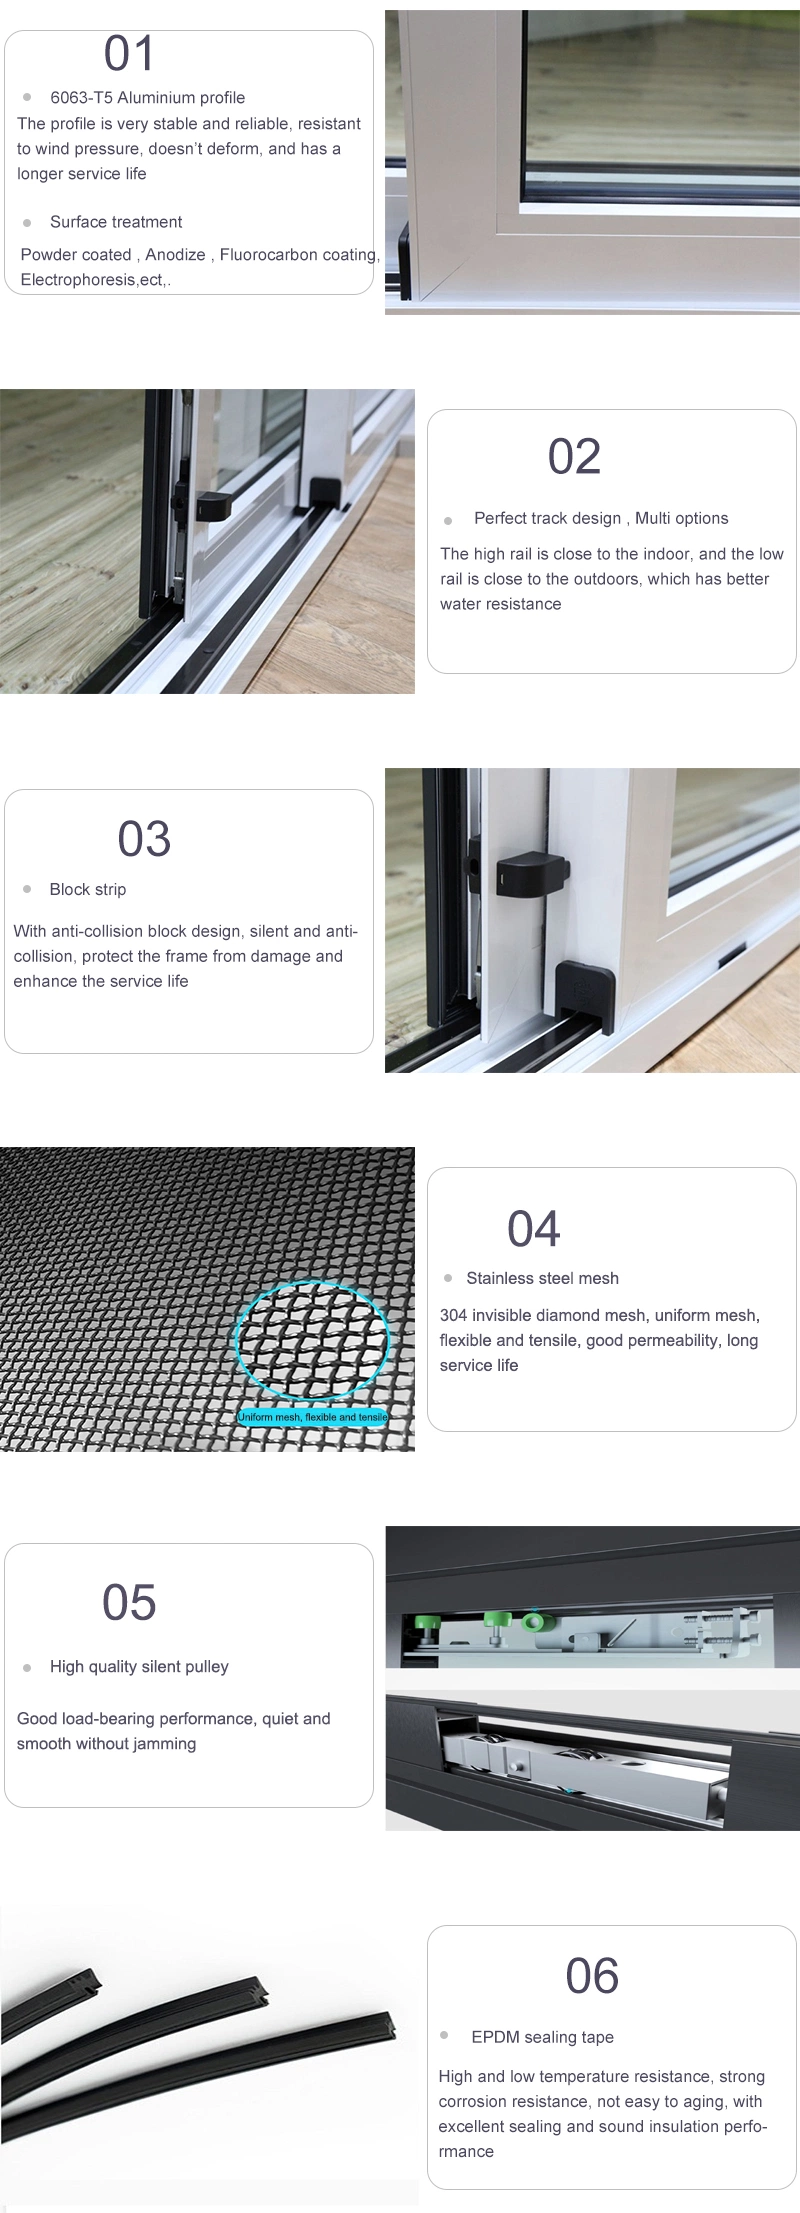 Modern Design Customized Sliding &amp; Lift Windows Door System Exterior Double Glass Patio Aluminium Sliding Door